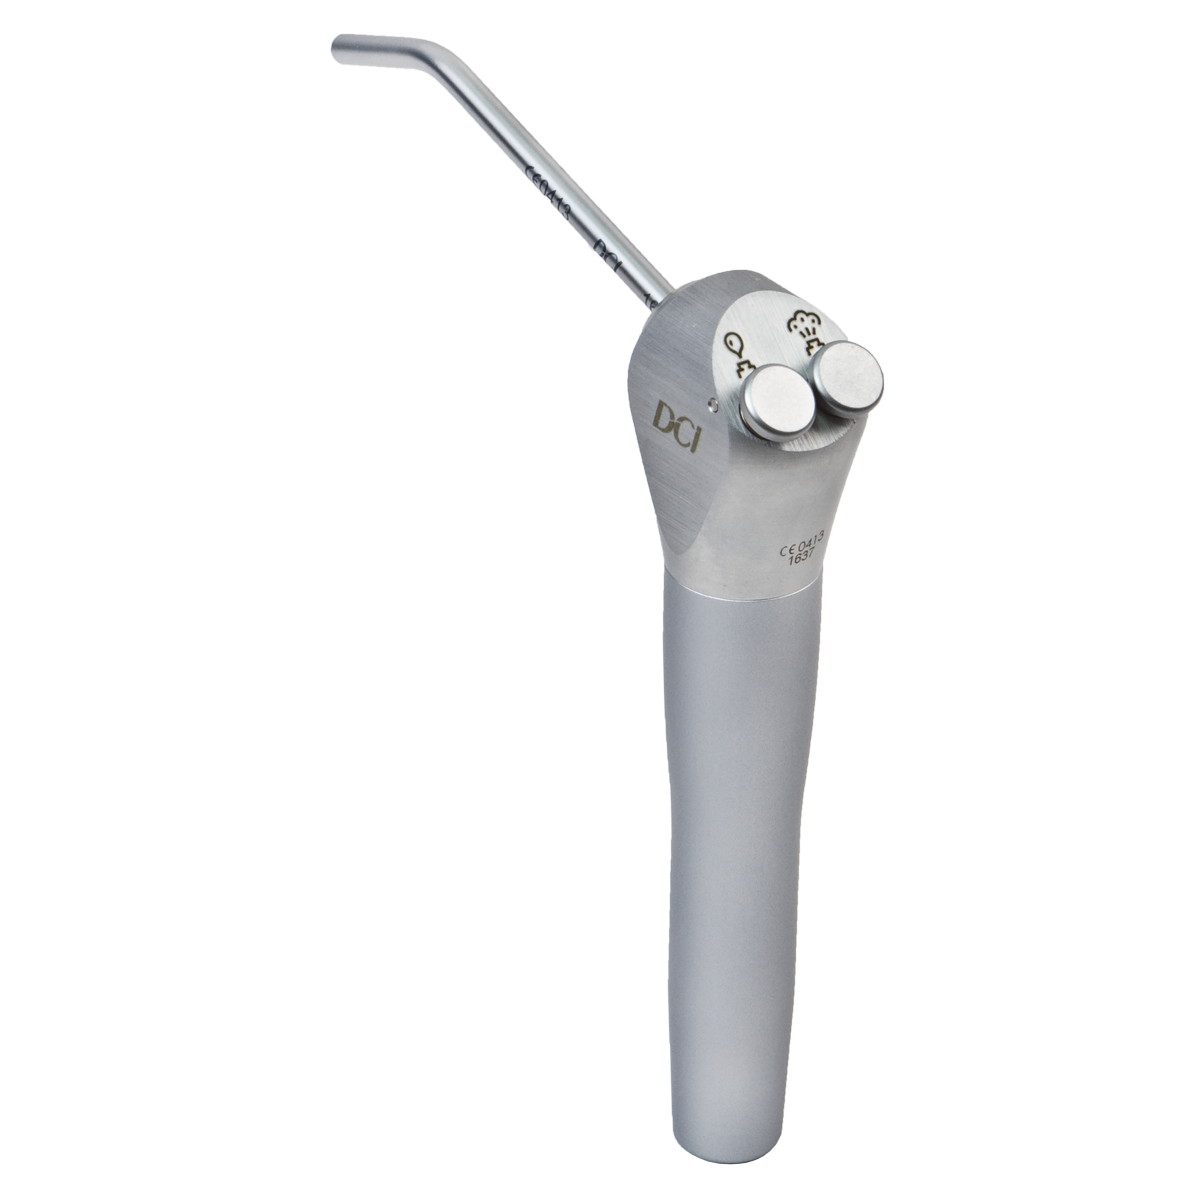 DCI Precision Comfort Air/Water Syringe